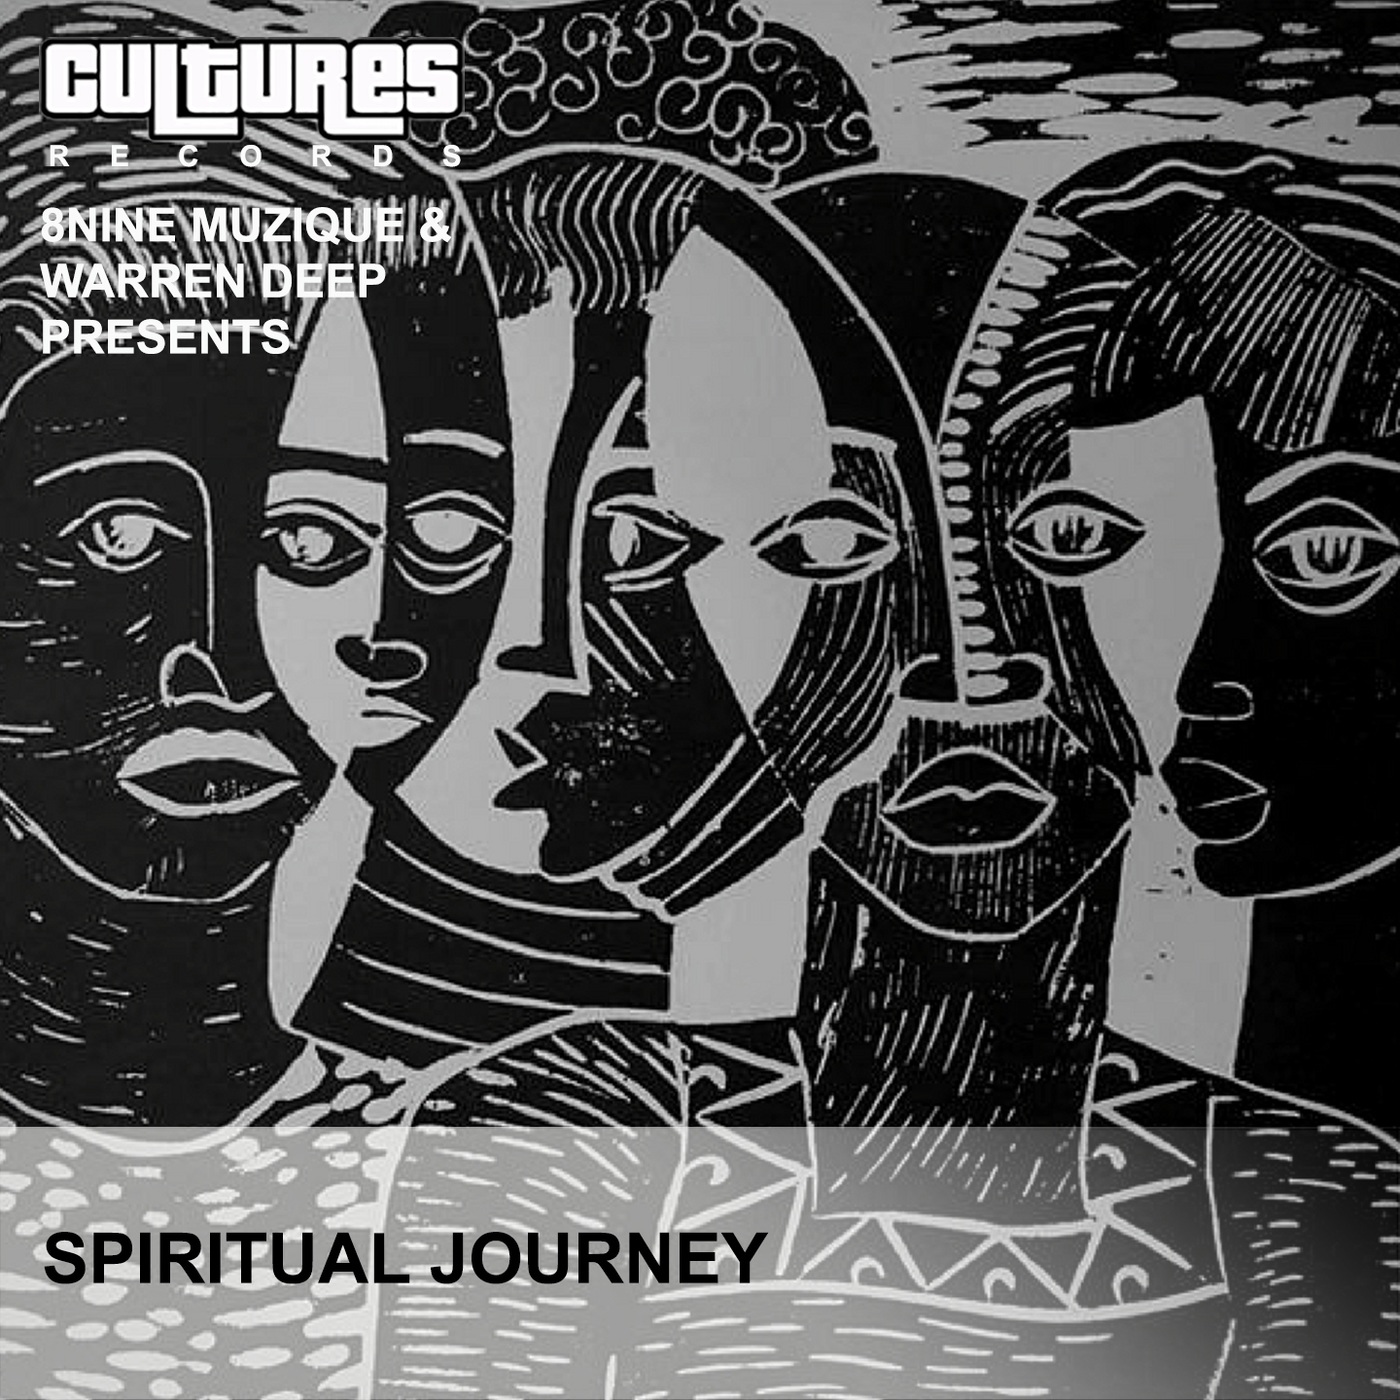 8nine Muzique & Warren Deep - Spiritual Journey / Cultures Records